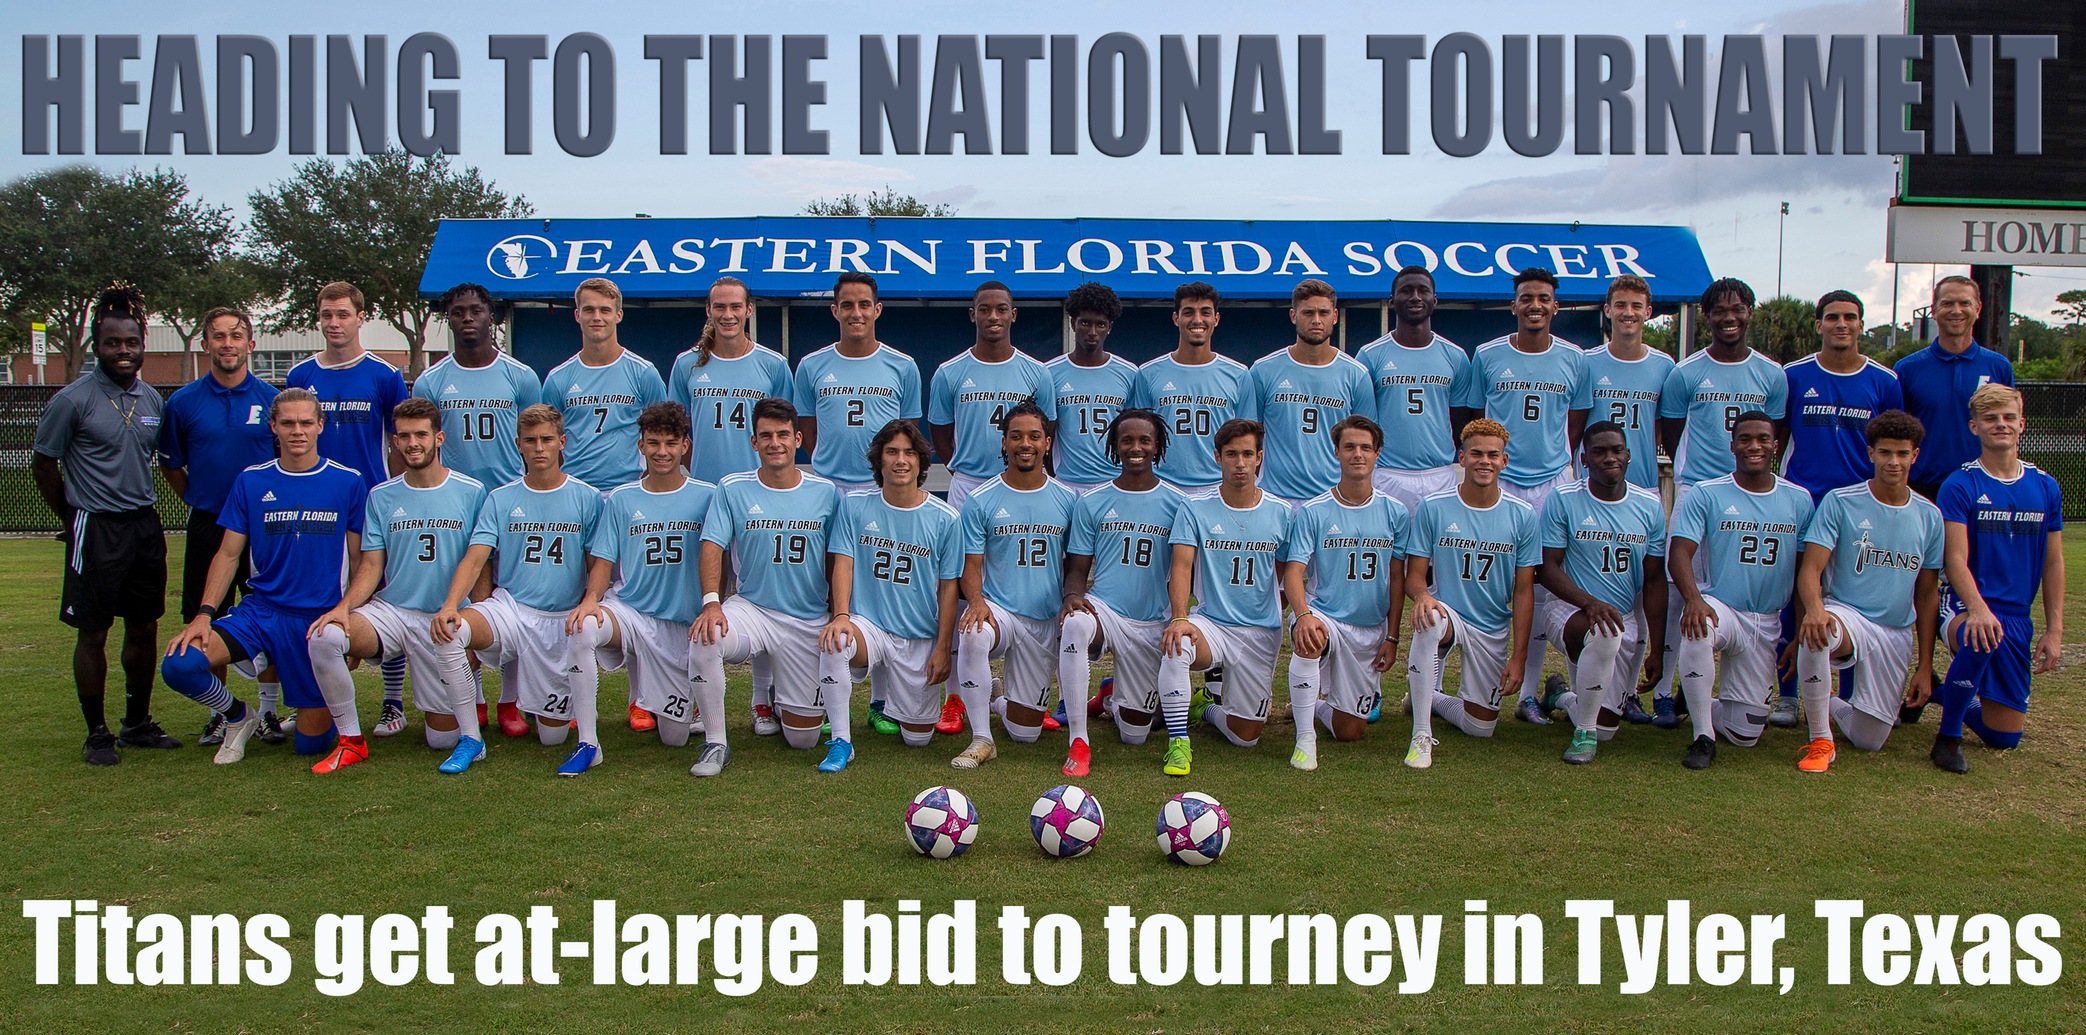 Men's soccer team gets at-large bid to national tournament